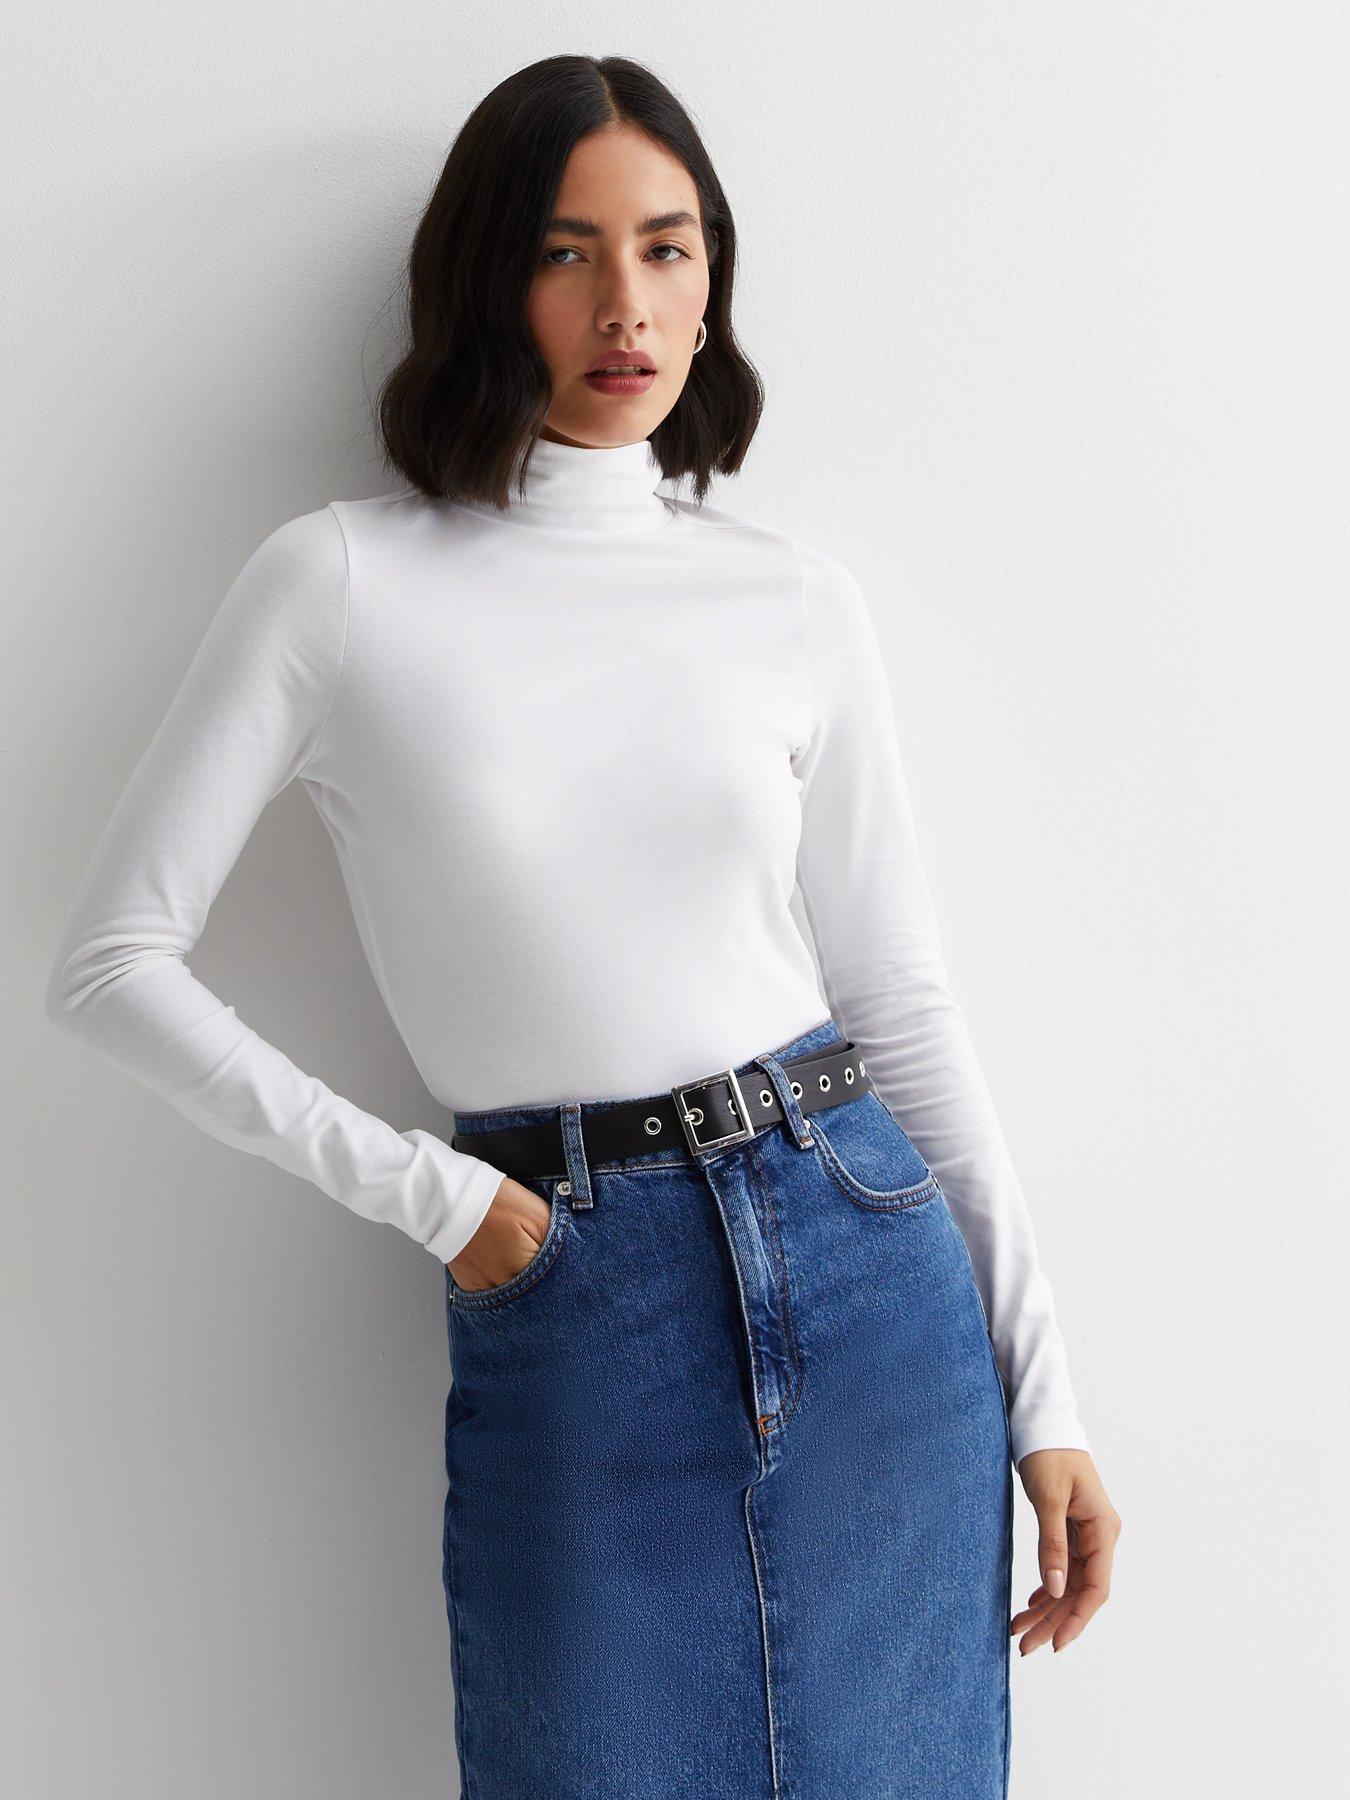 Pepe jeans Lulu Long Sleeve T-Shirt White